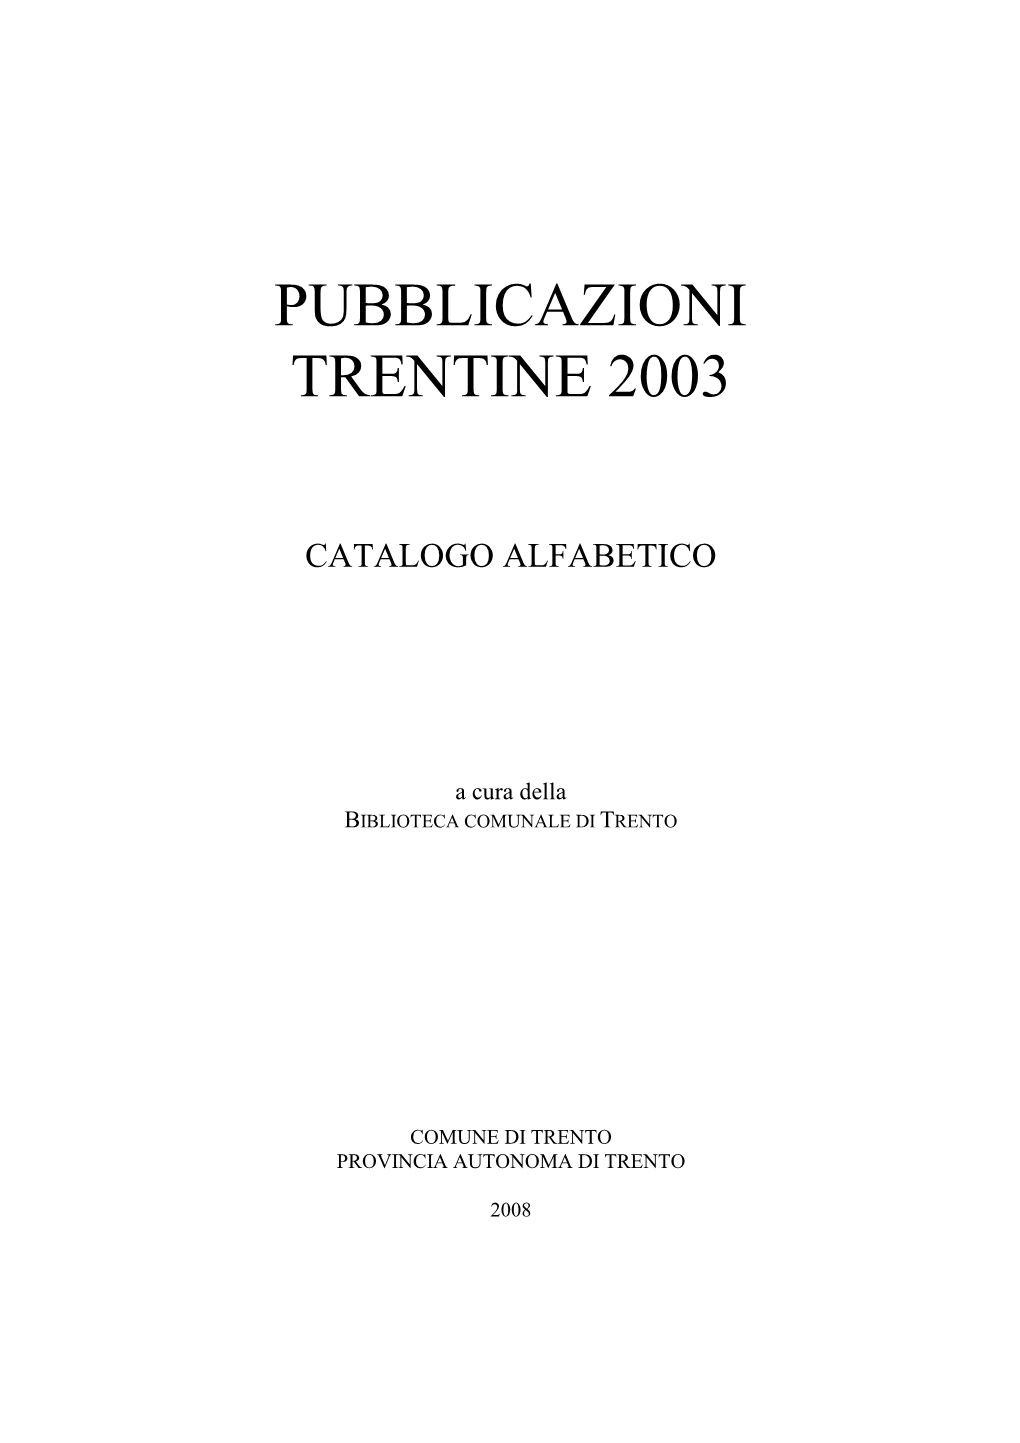 Pubblicazioni Trentine 2003